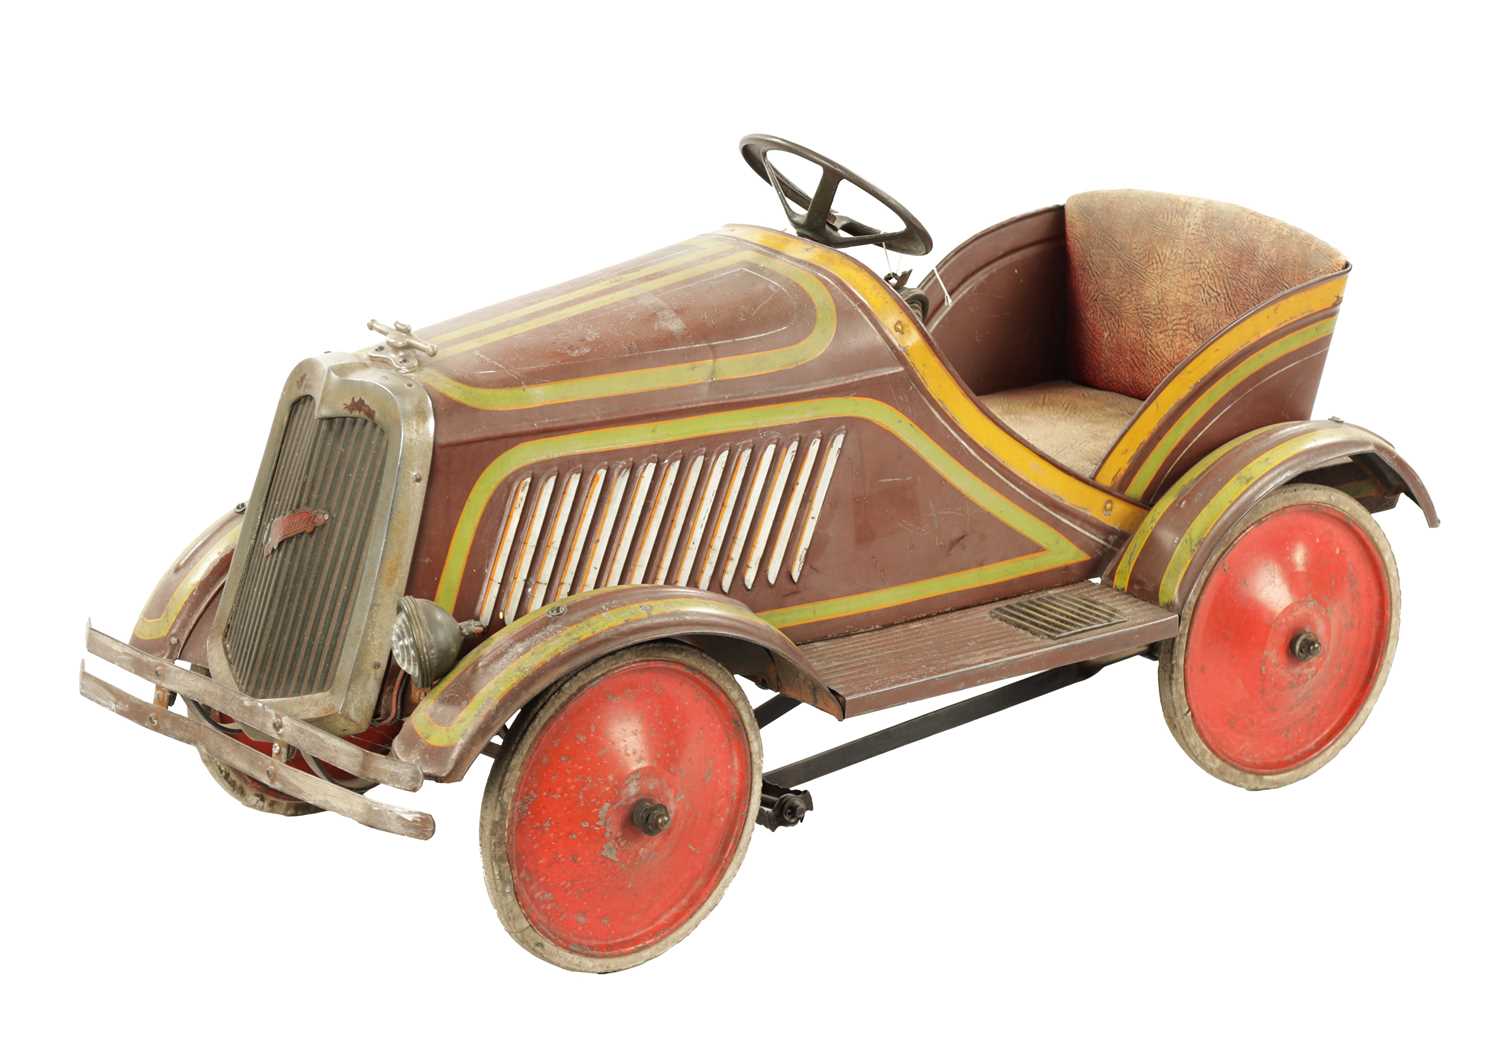 Lot 20 - A RARE VINTAGE GERMAN CHILD’S ROADSTER PEDAL CAR CIRCA 1936